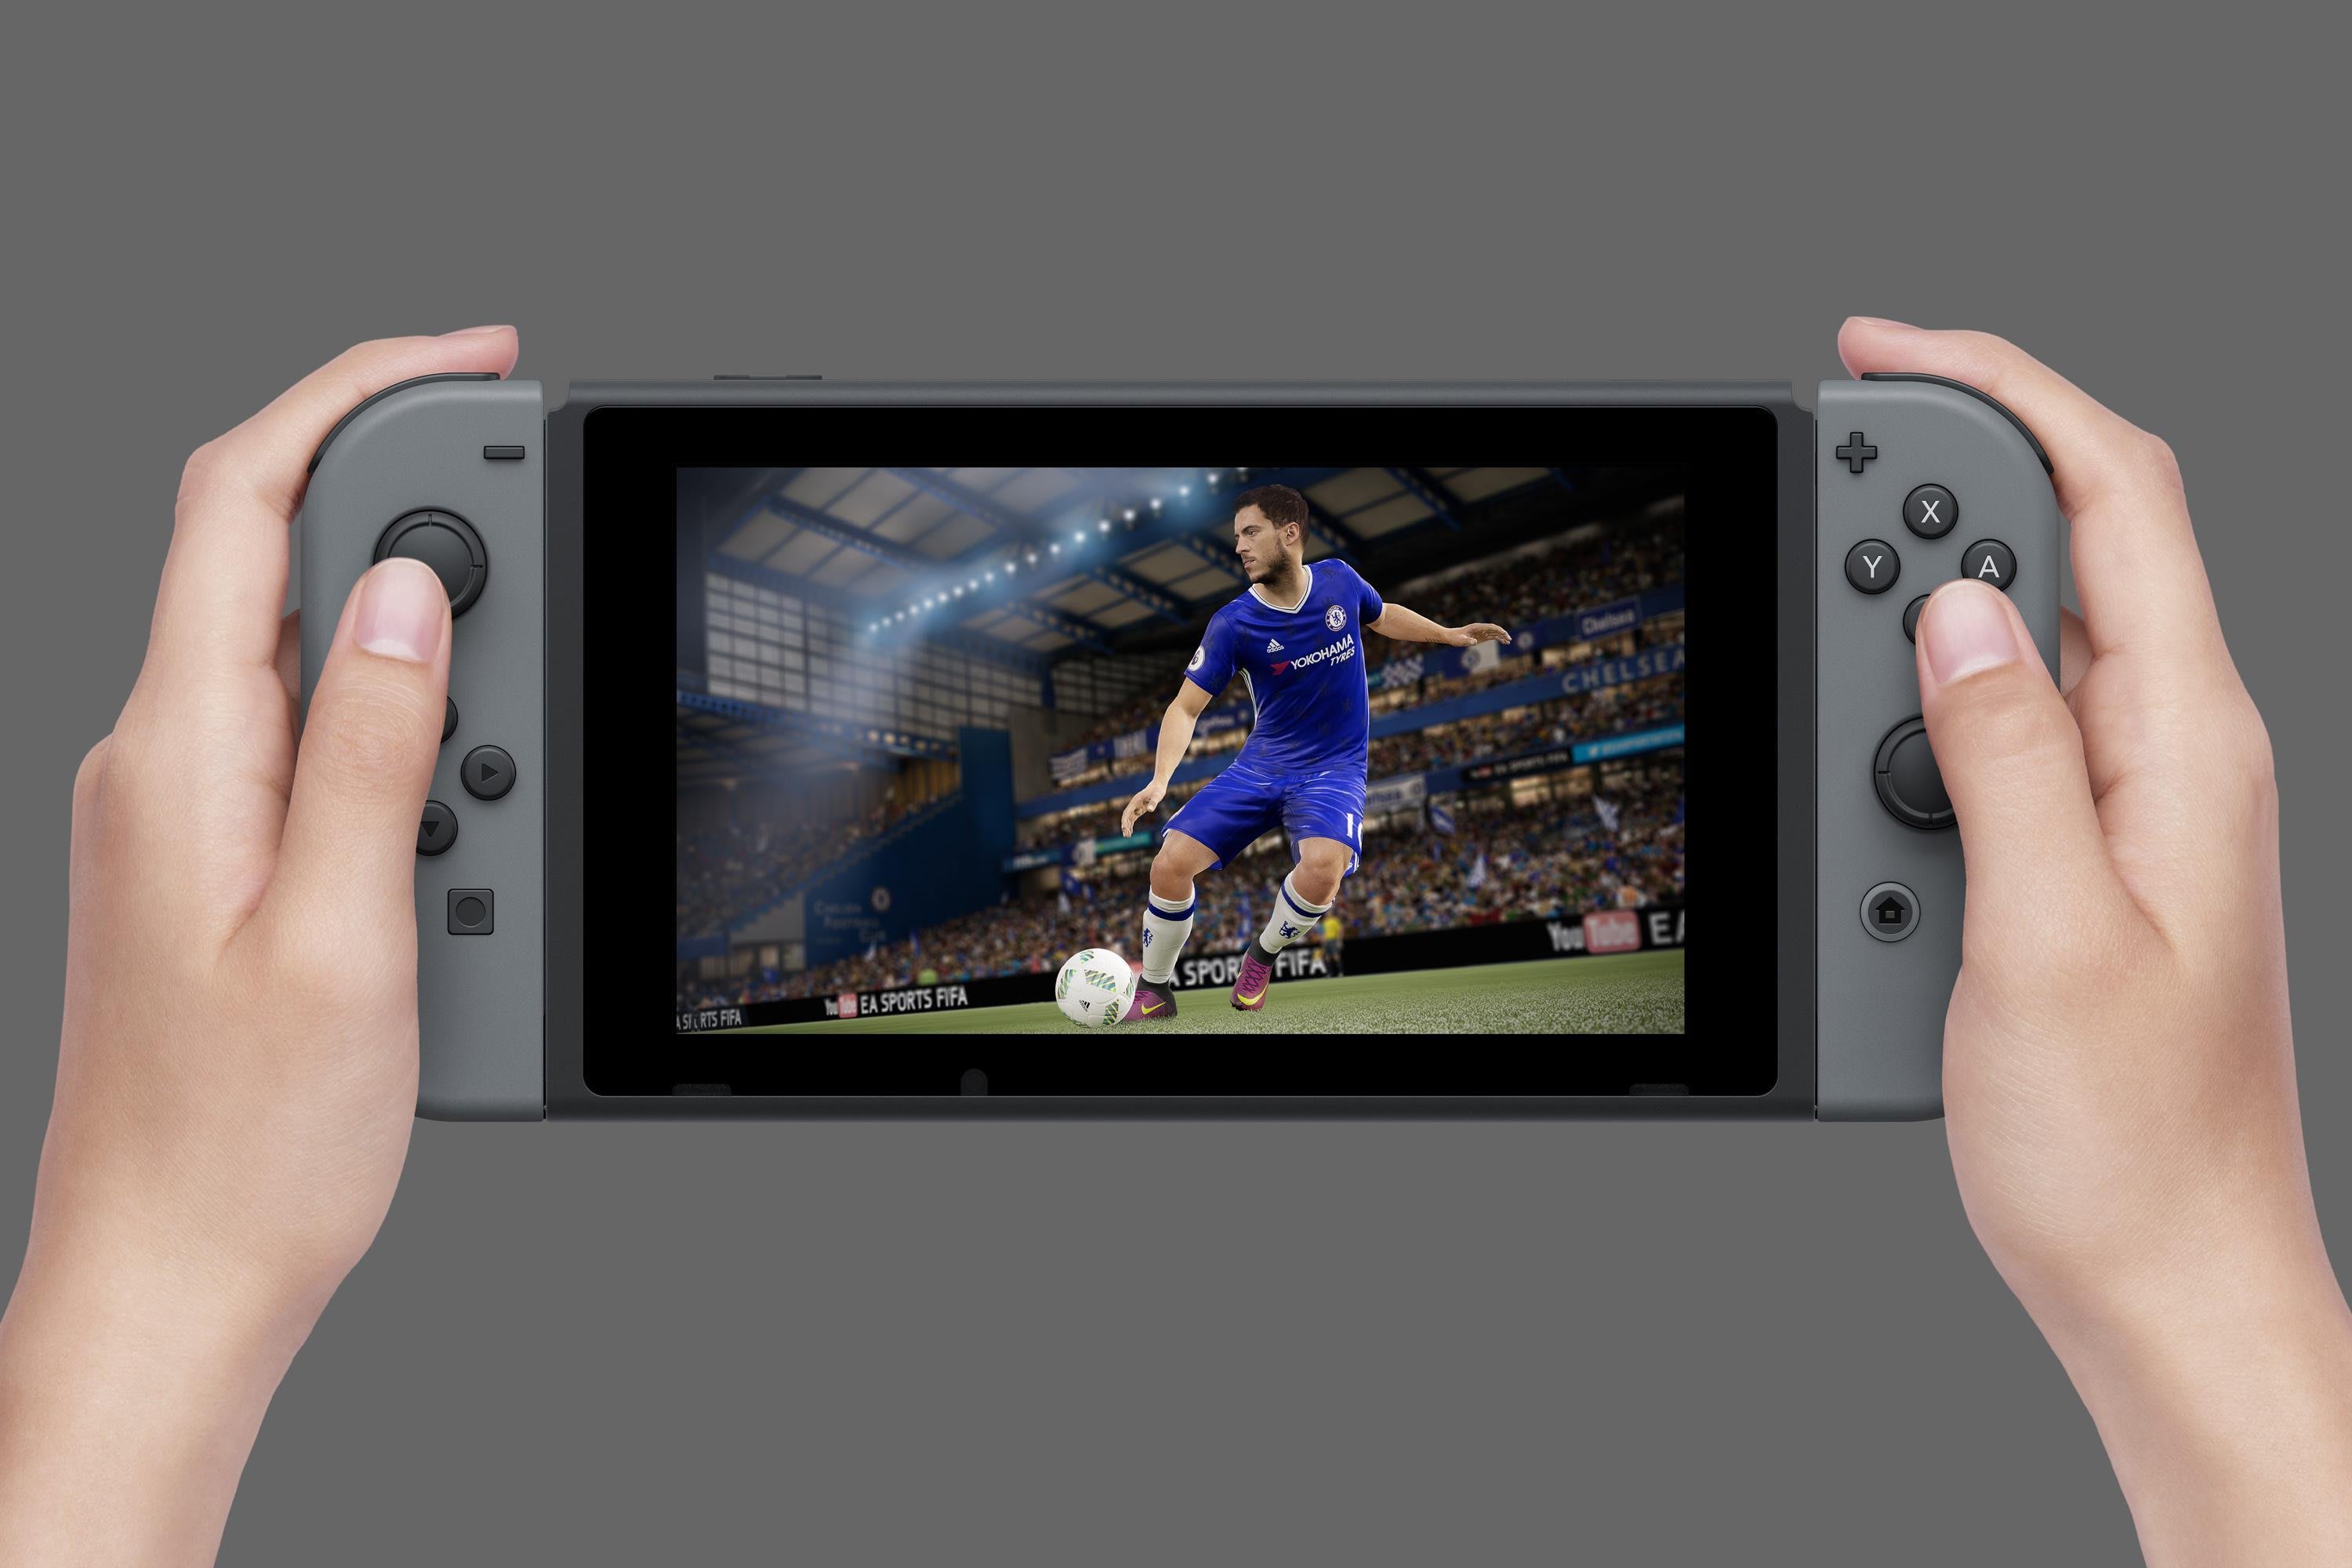 Nintendo Switchの命運を左右する『FIFA 18』 | Games